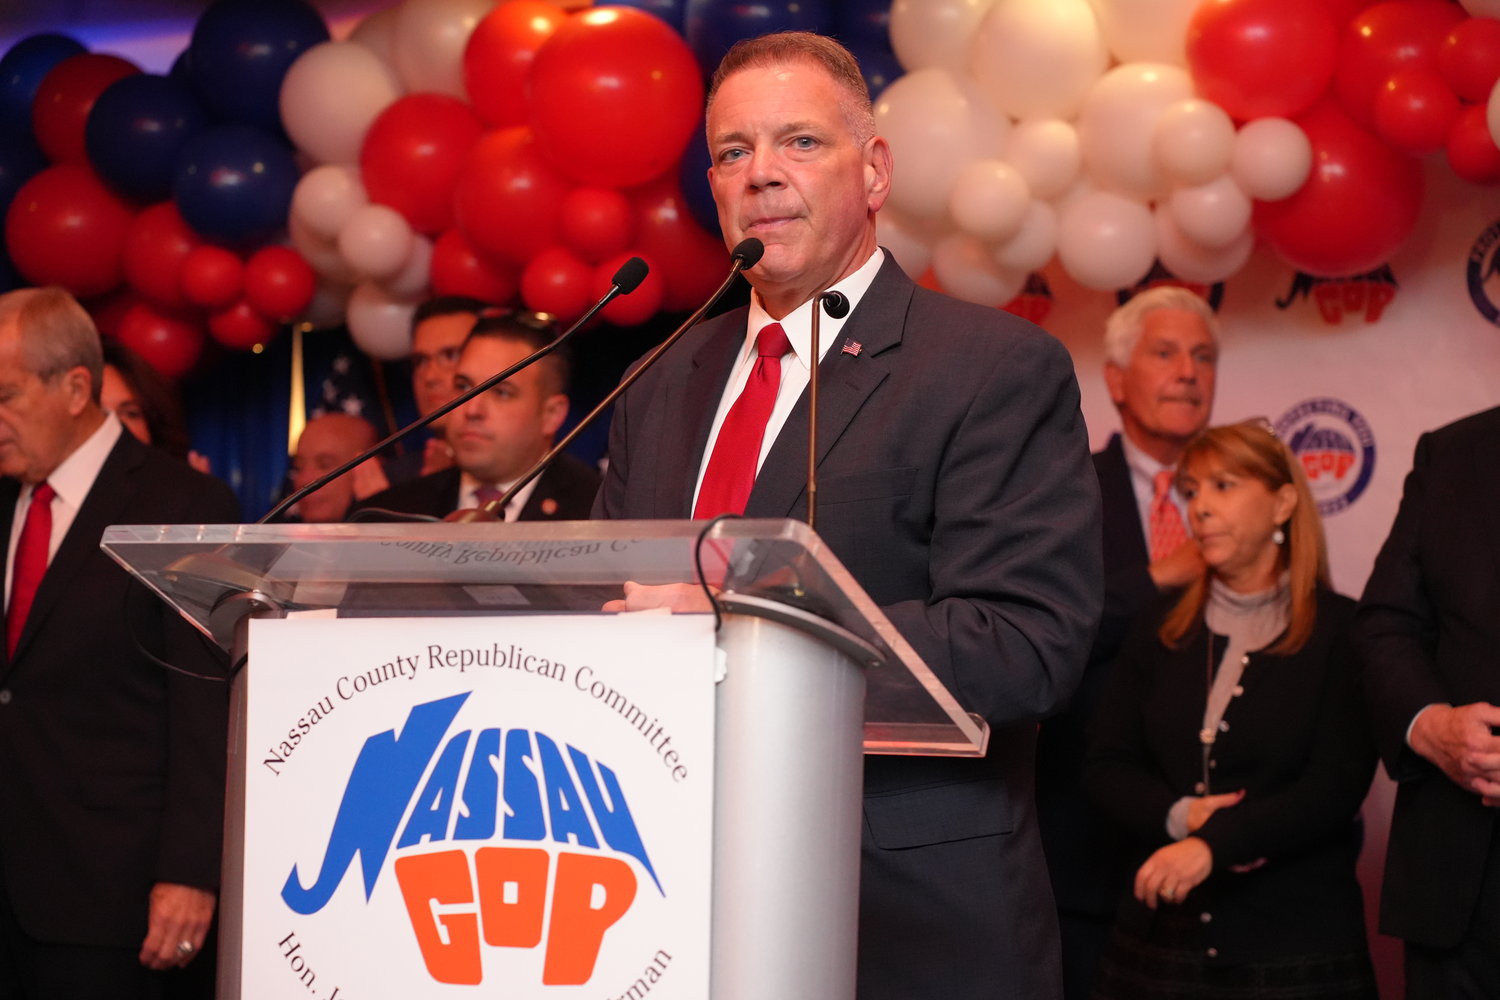 Steve Rhoads was among the Republicans who won on Nov. 8, defeating incumbent Senator John Brooks for New York's Fifth Senate District.